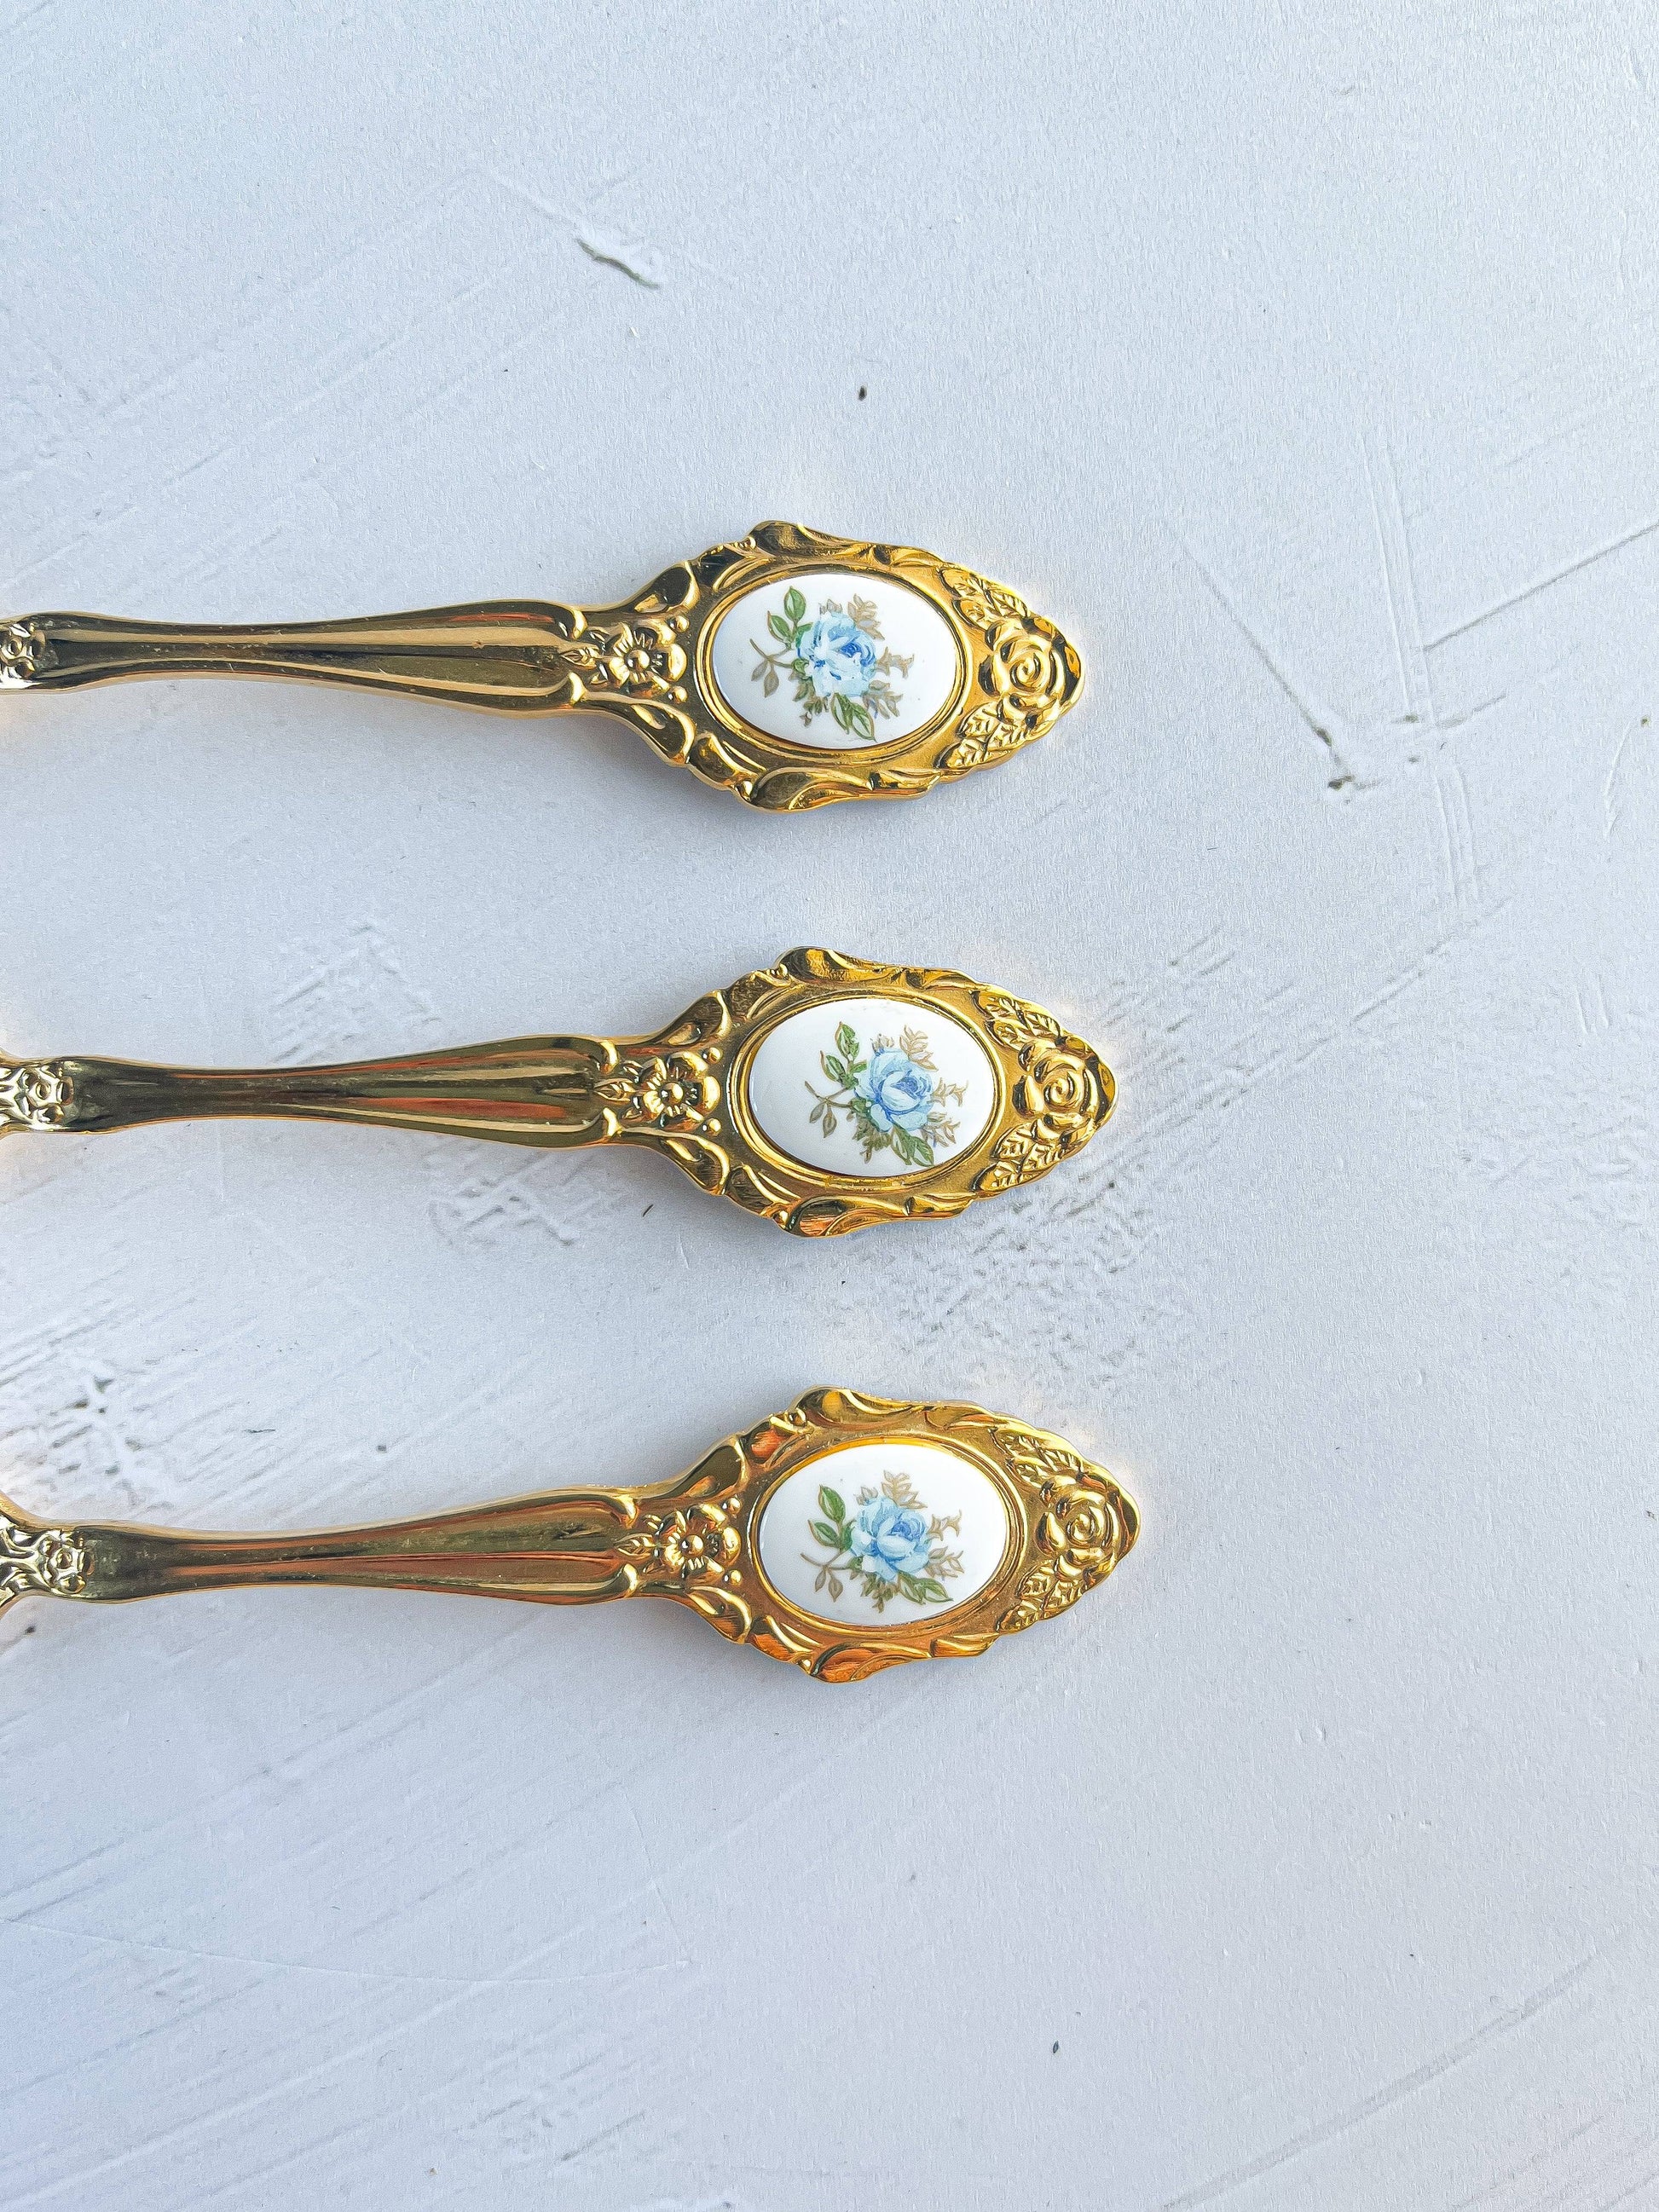 Eetrite 24k Gold-Plated Teaspoon with Blue Floral Medallion - SOSC Home